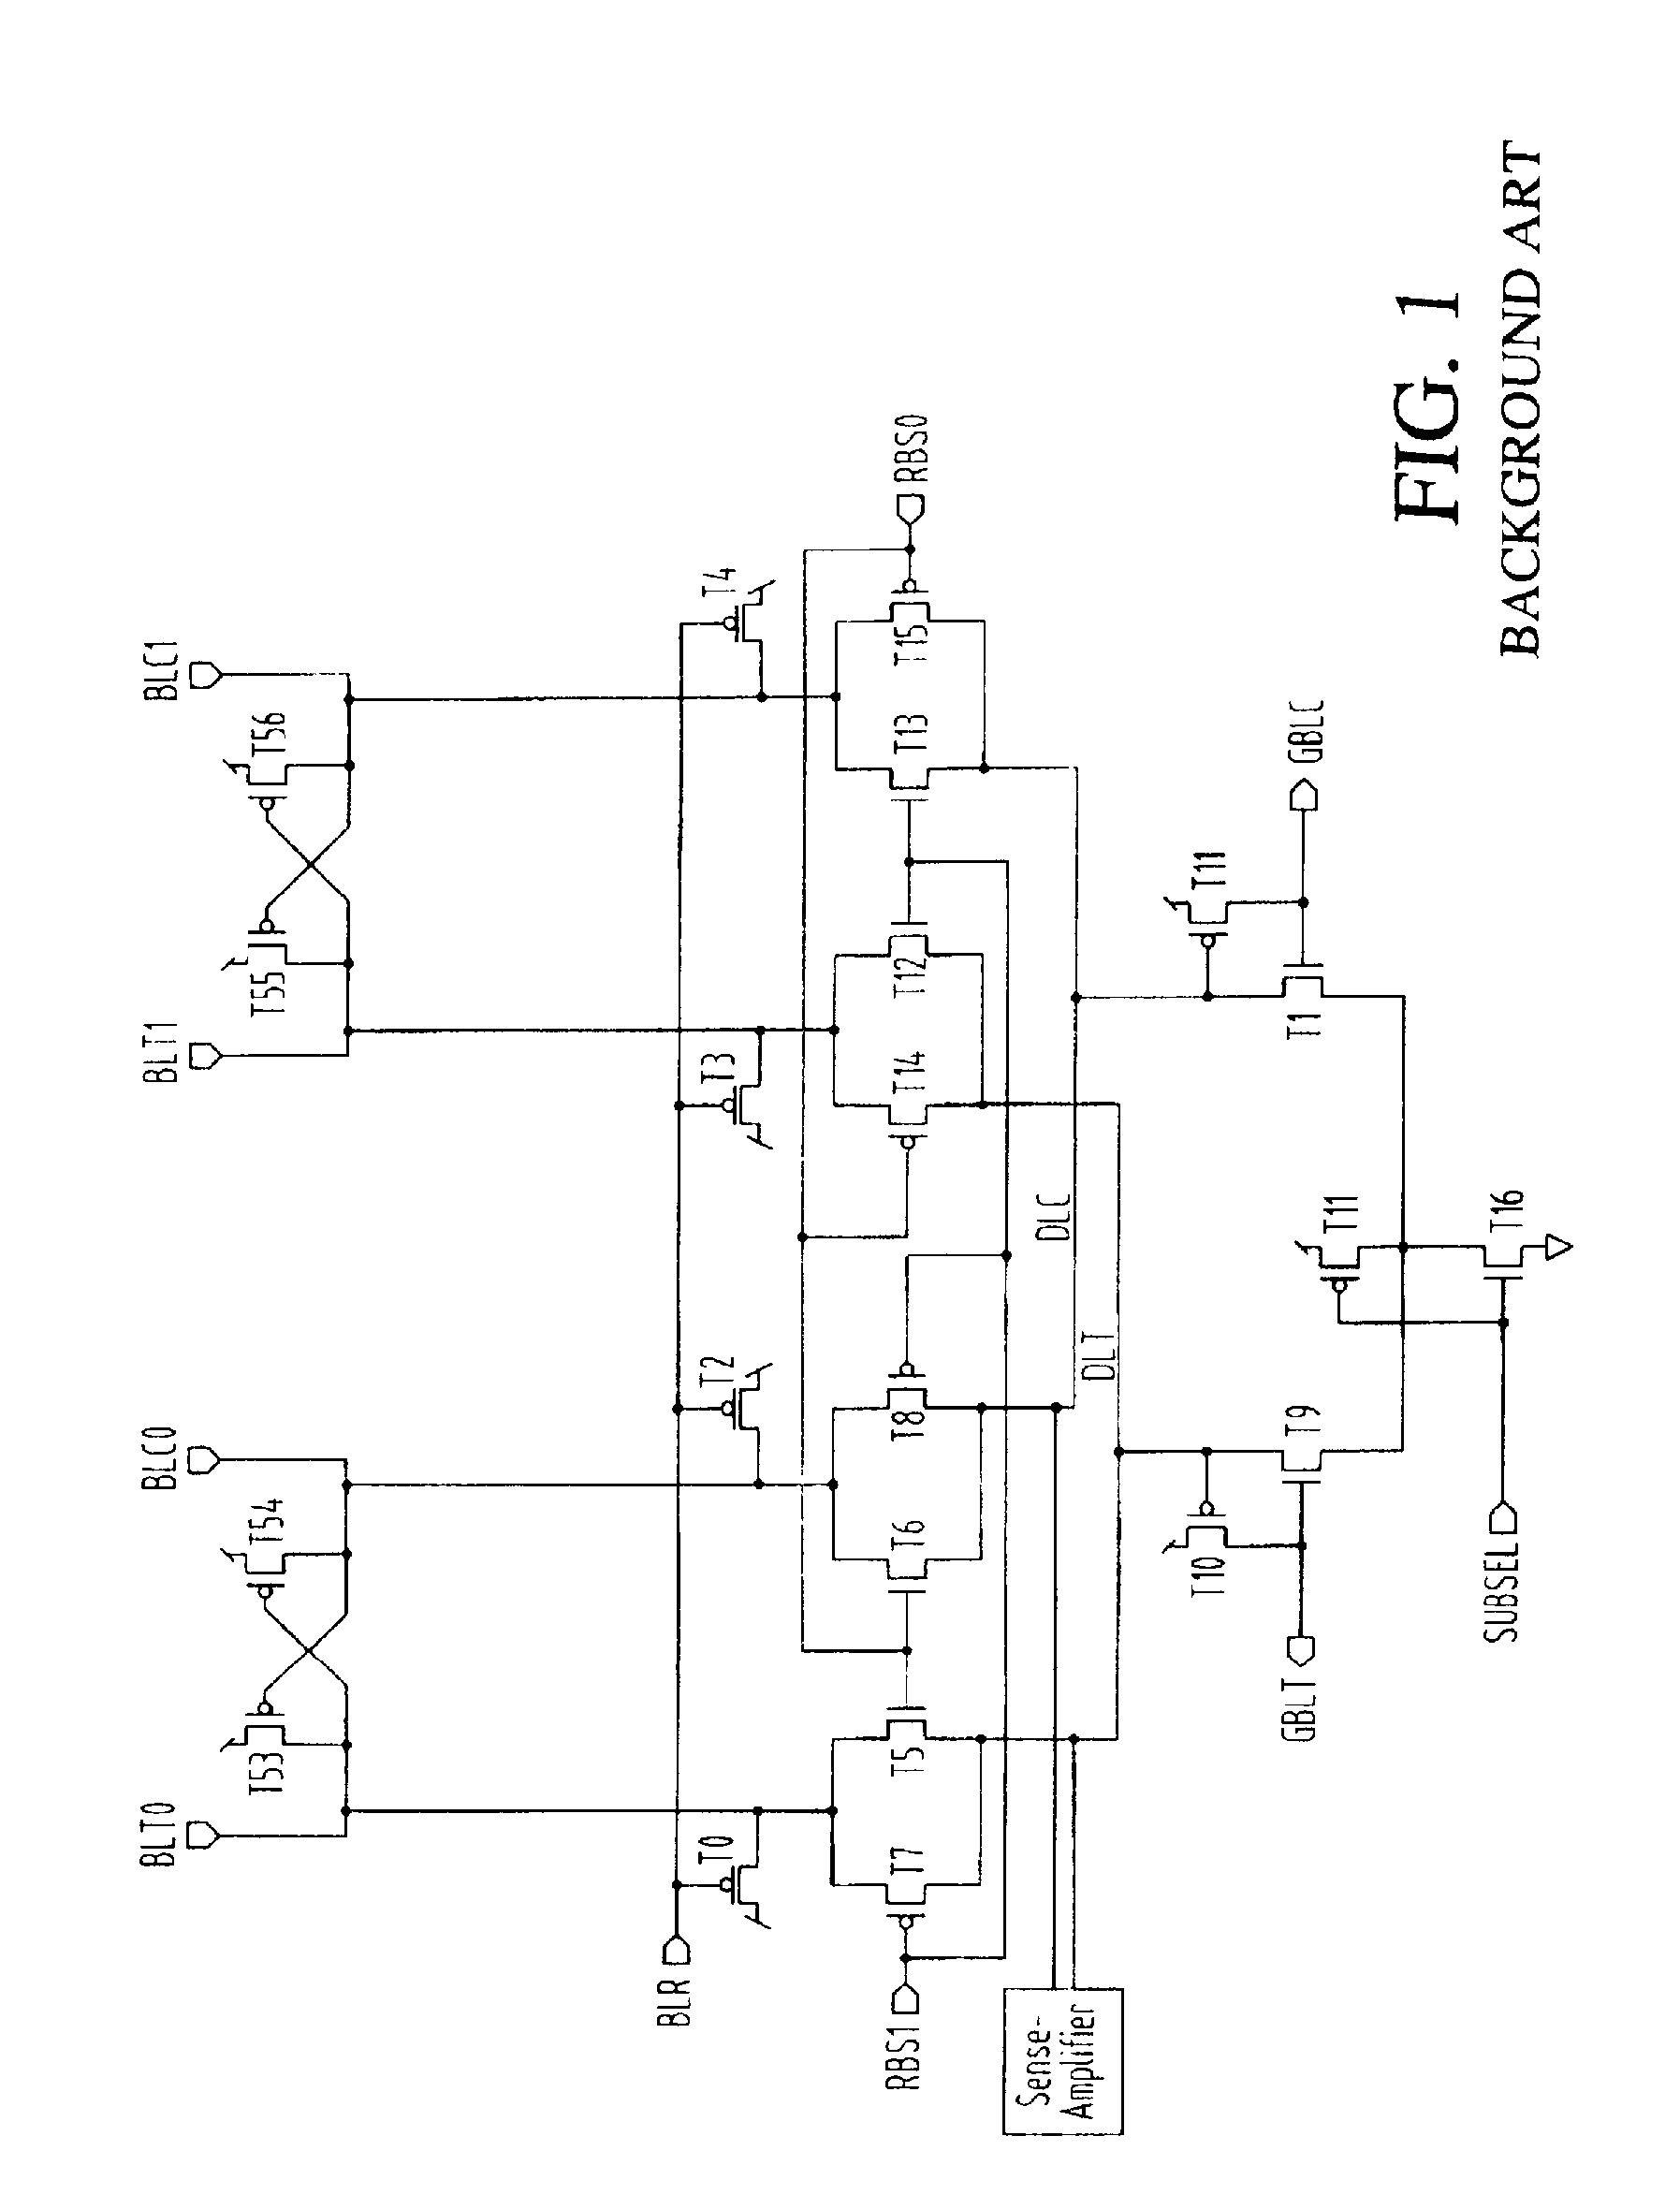 Sense-amplifier assist (SAA) with power-reduction technique